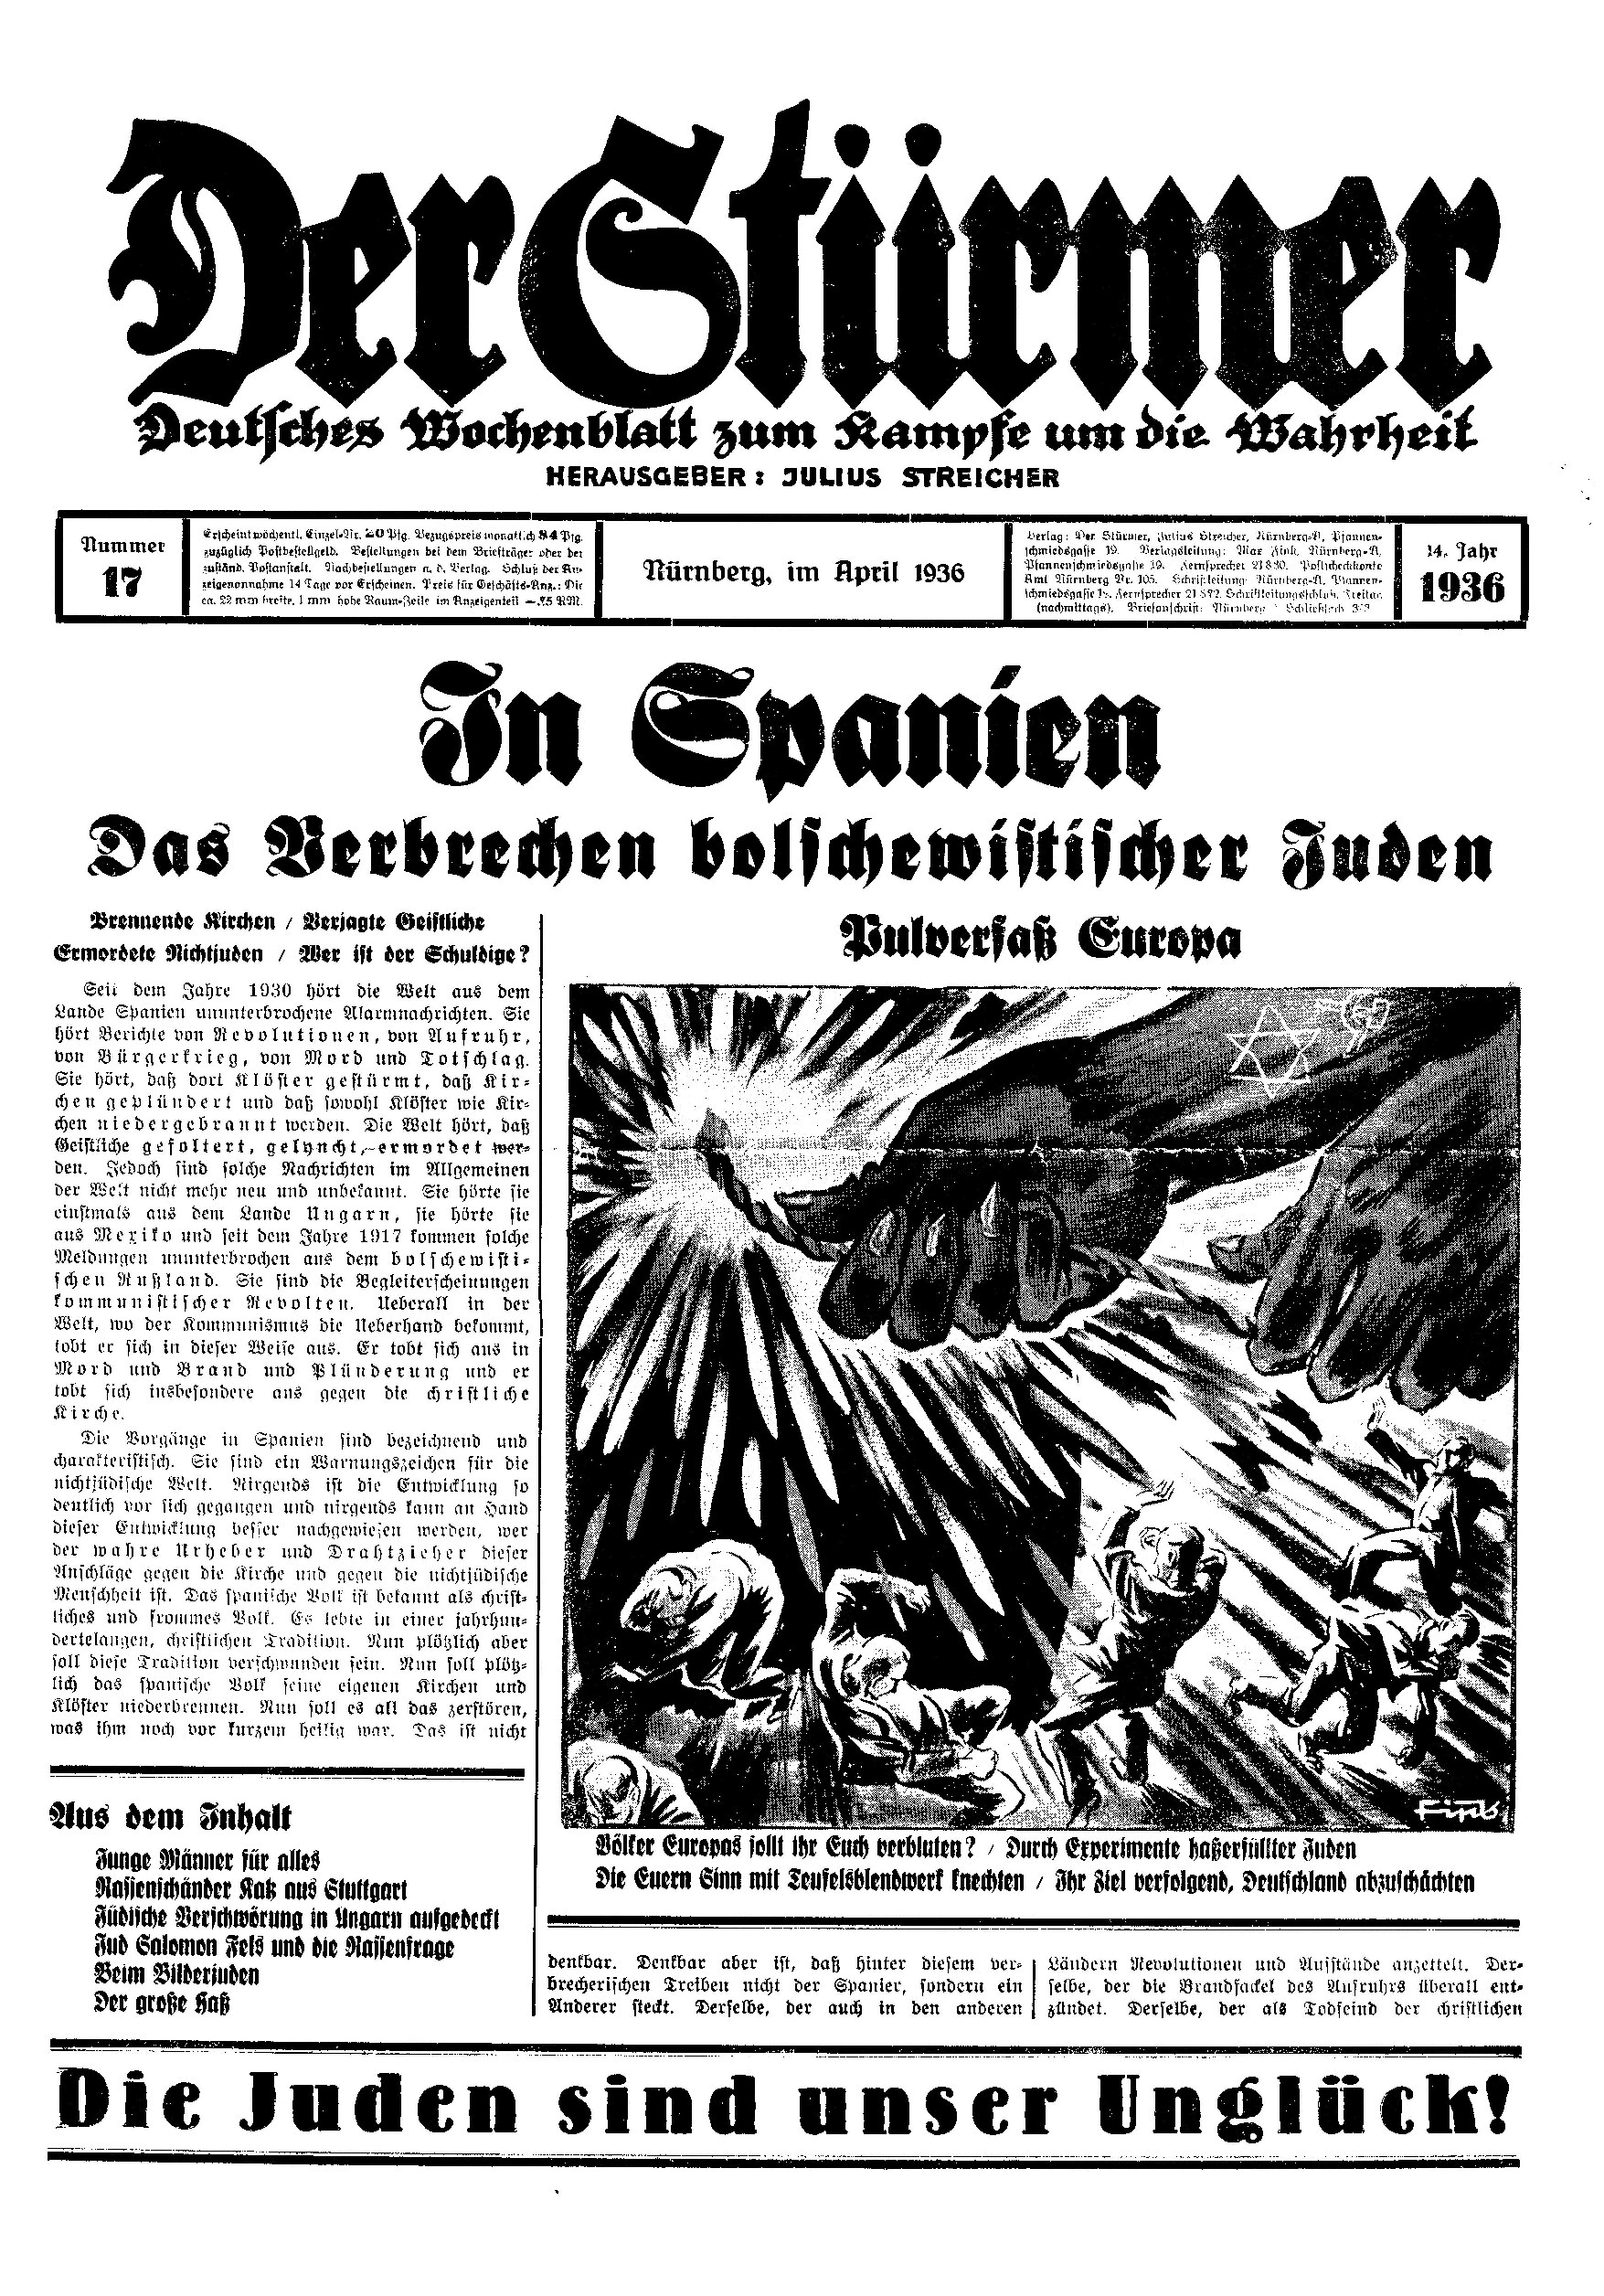 Der Stürmer - 1936 Nr. 17 - In Spanien